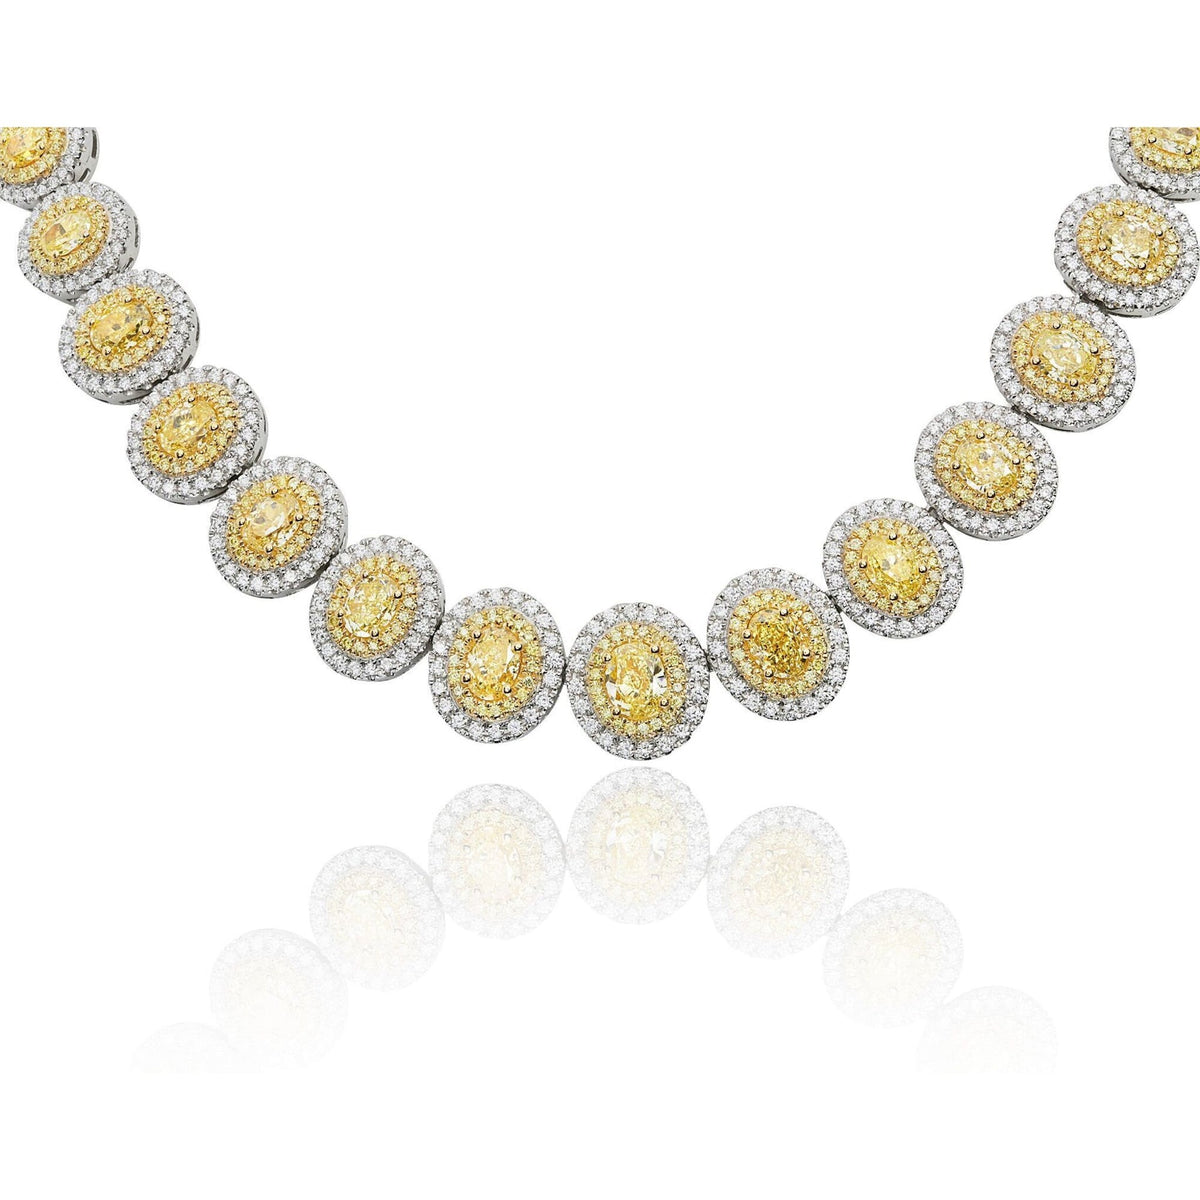 Elegant Roman Jules 18K White and Yellow Gold Oval Double Halo Diamond Necklace